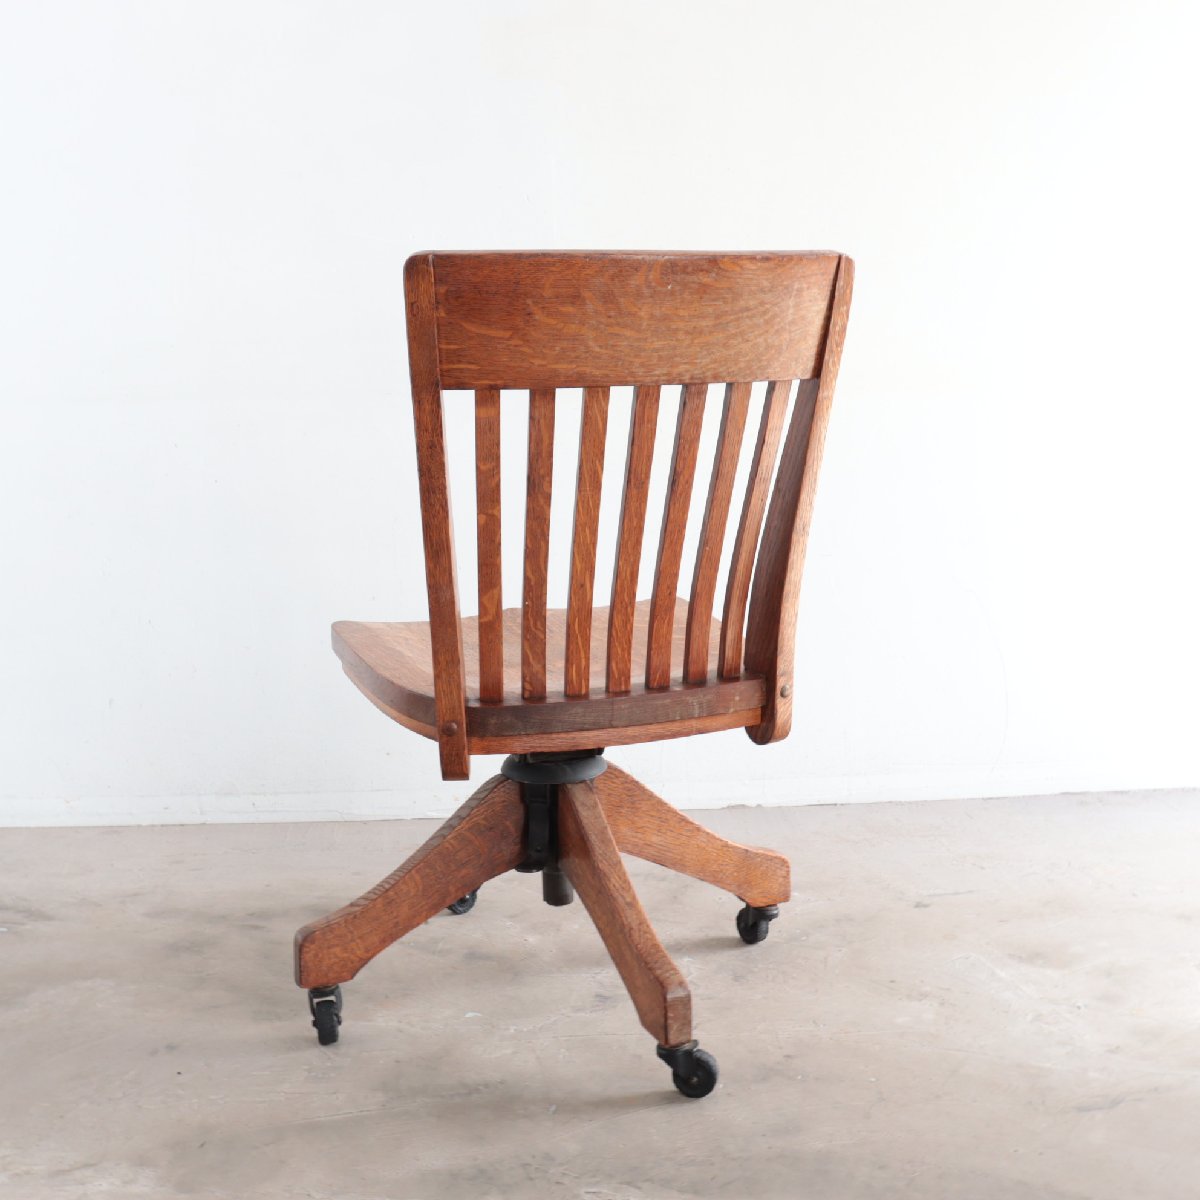 50s アメリカ ヴィンテージ デスクチェア アンティーク 木製 椅子